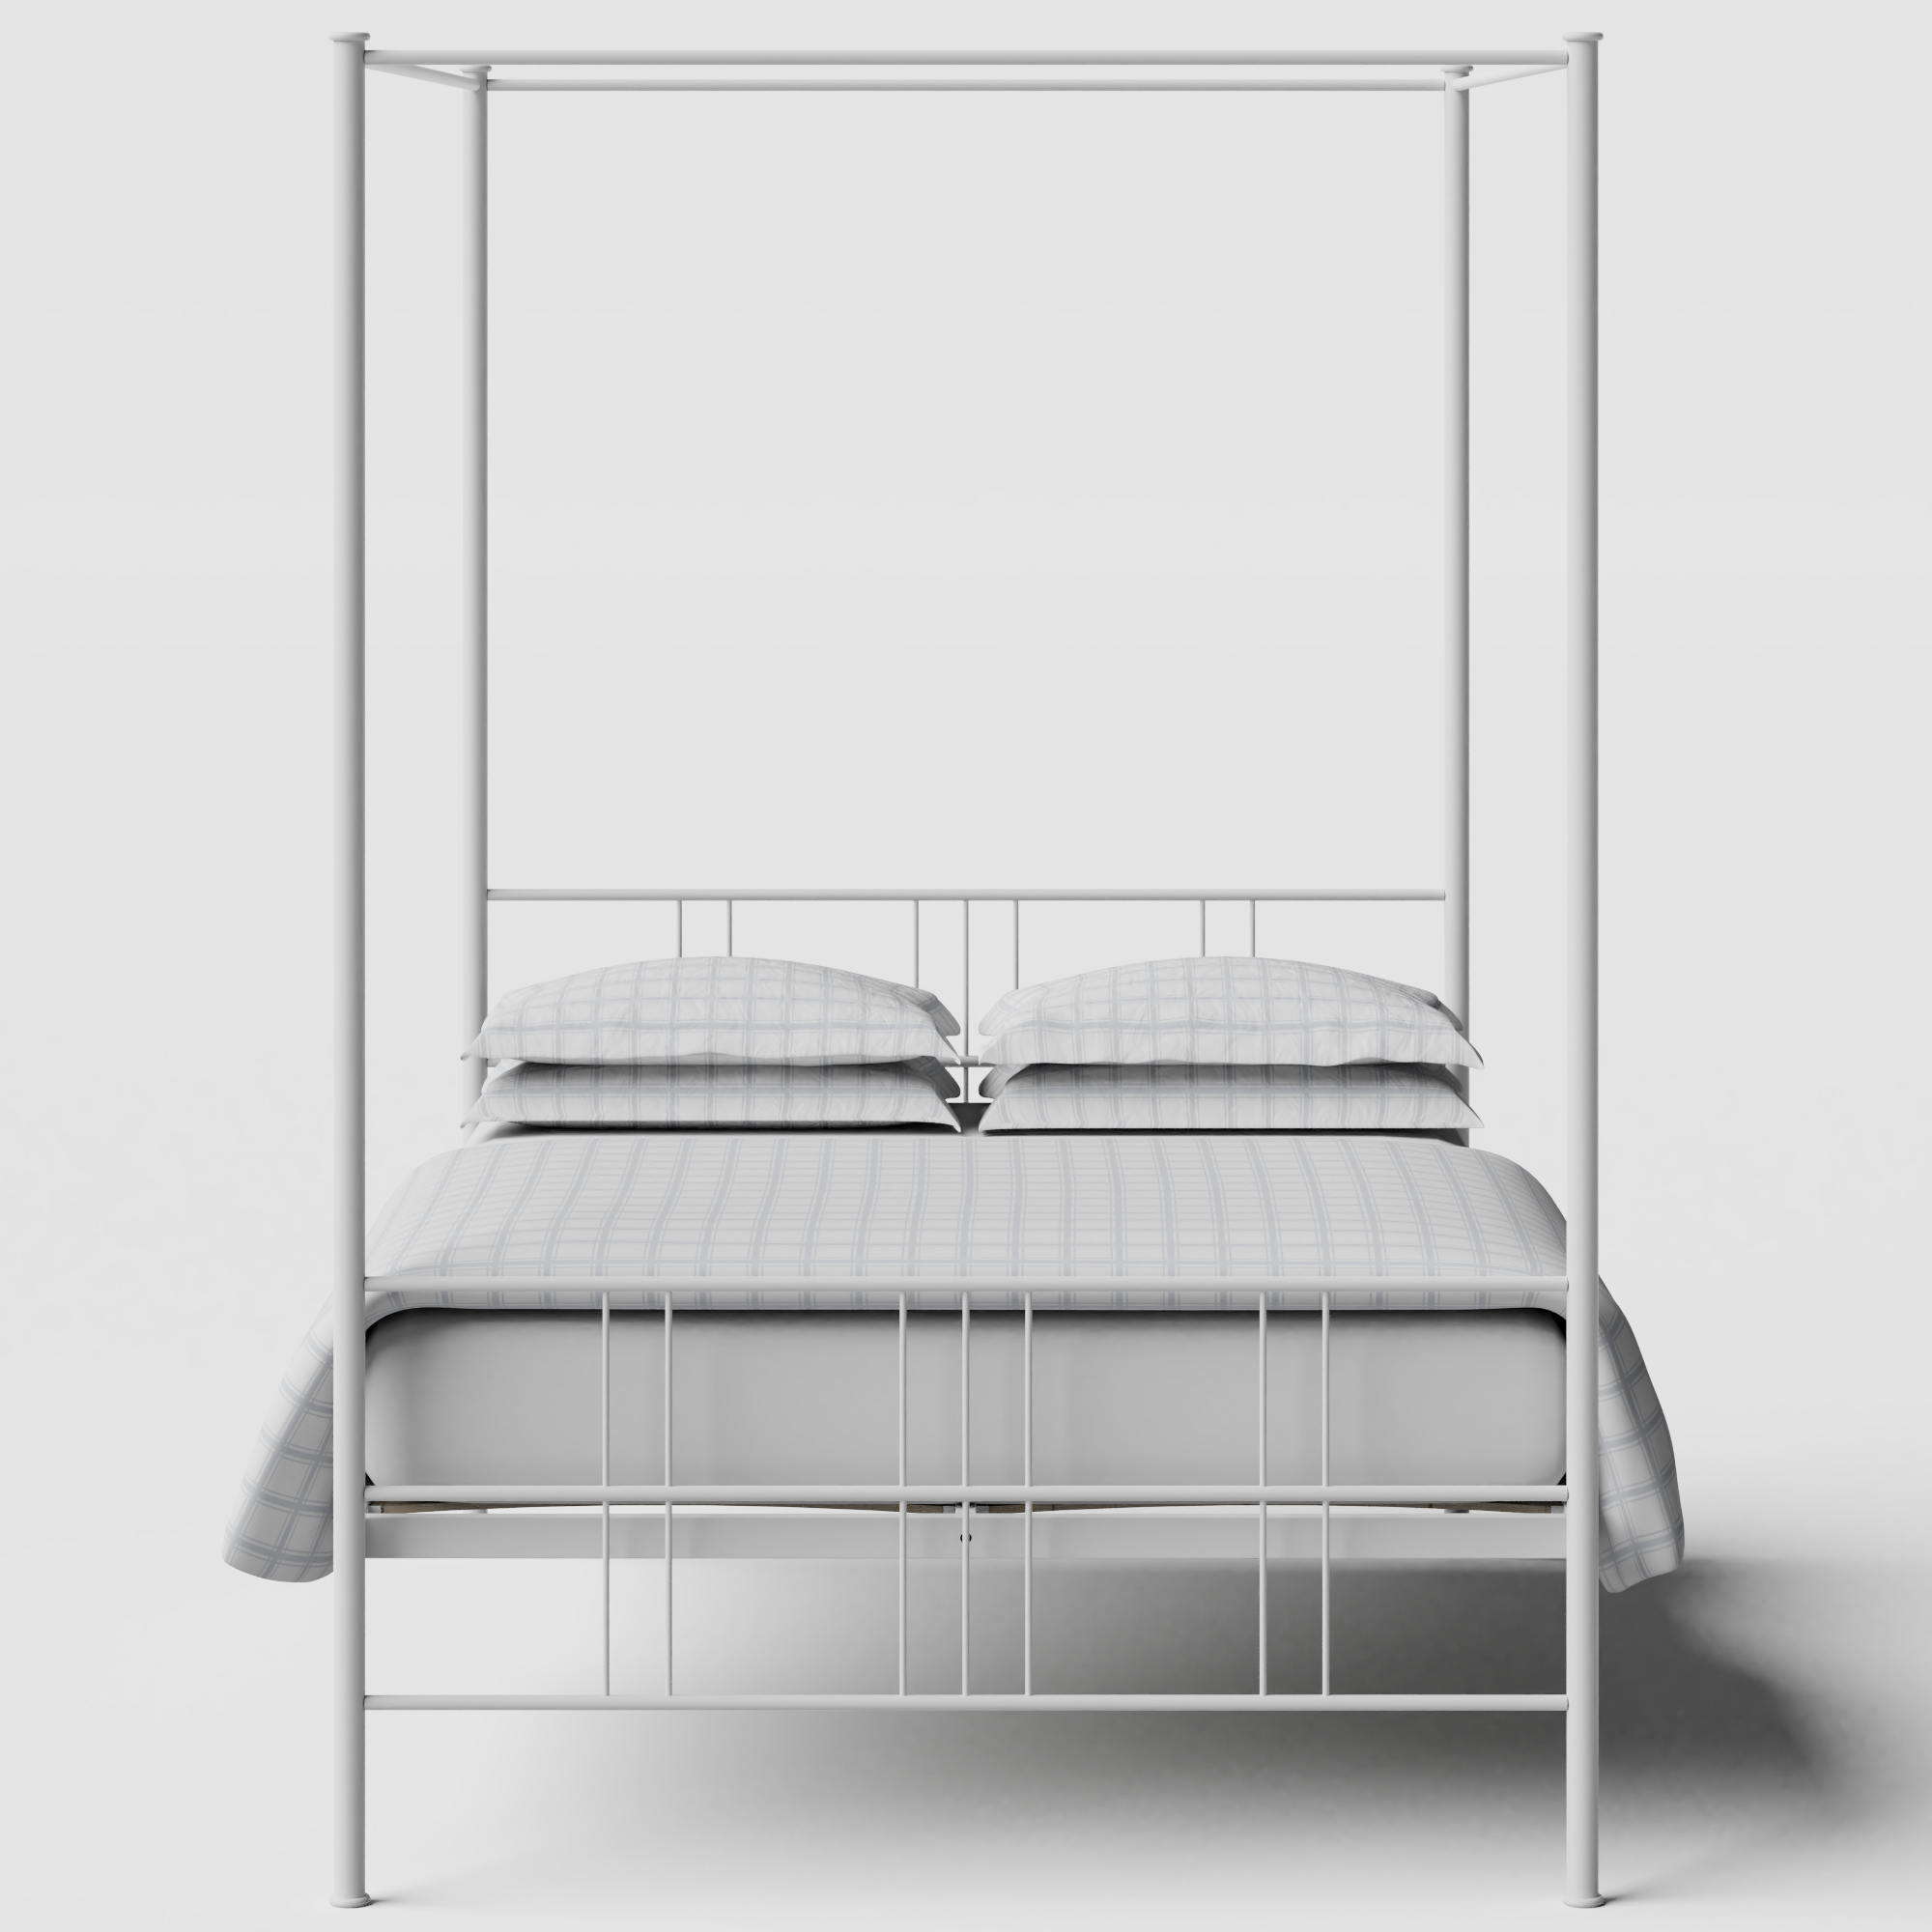 Toulon iron/metal bed in white